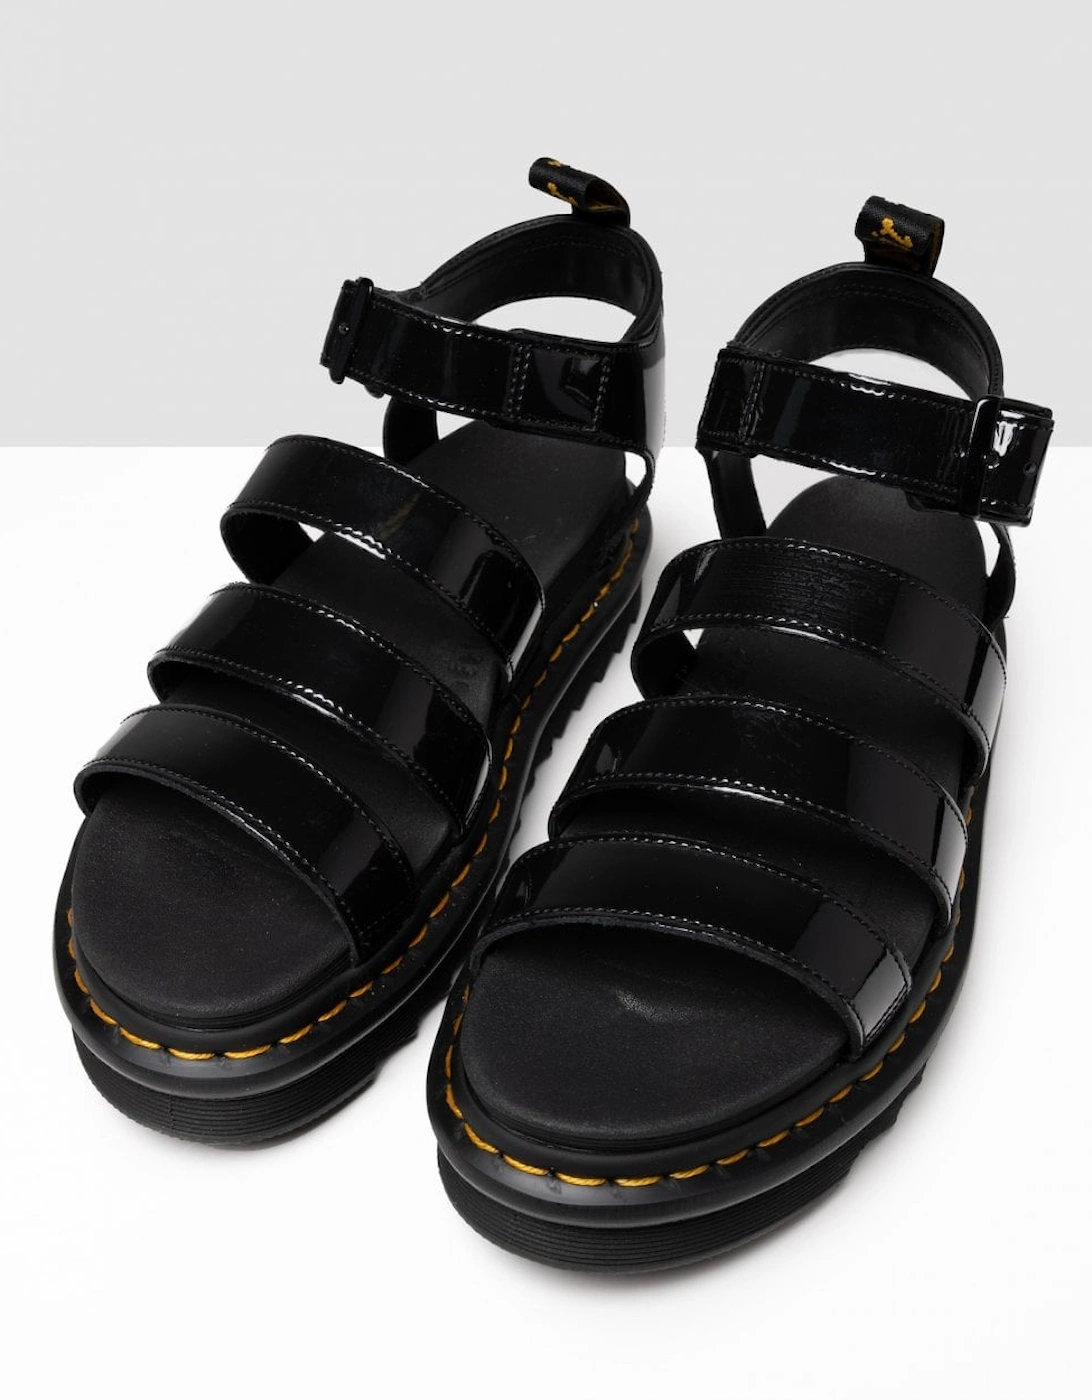 Blaire Patent Lamper Womens Gladiator Sandals